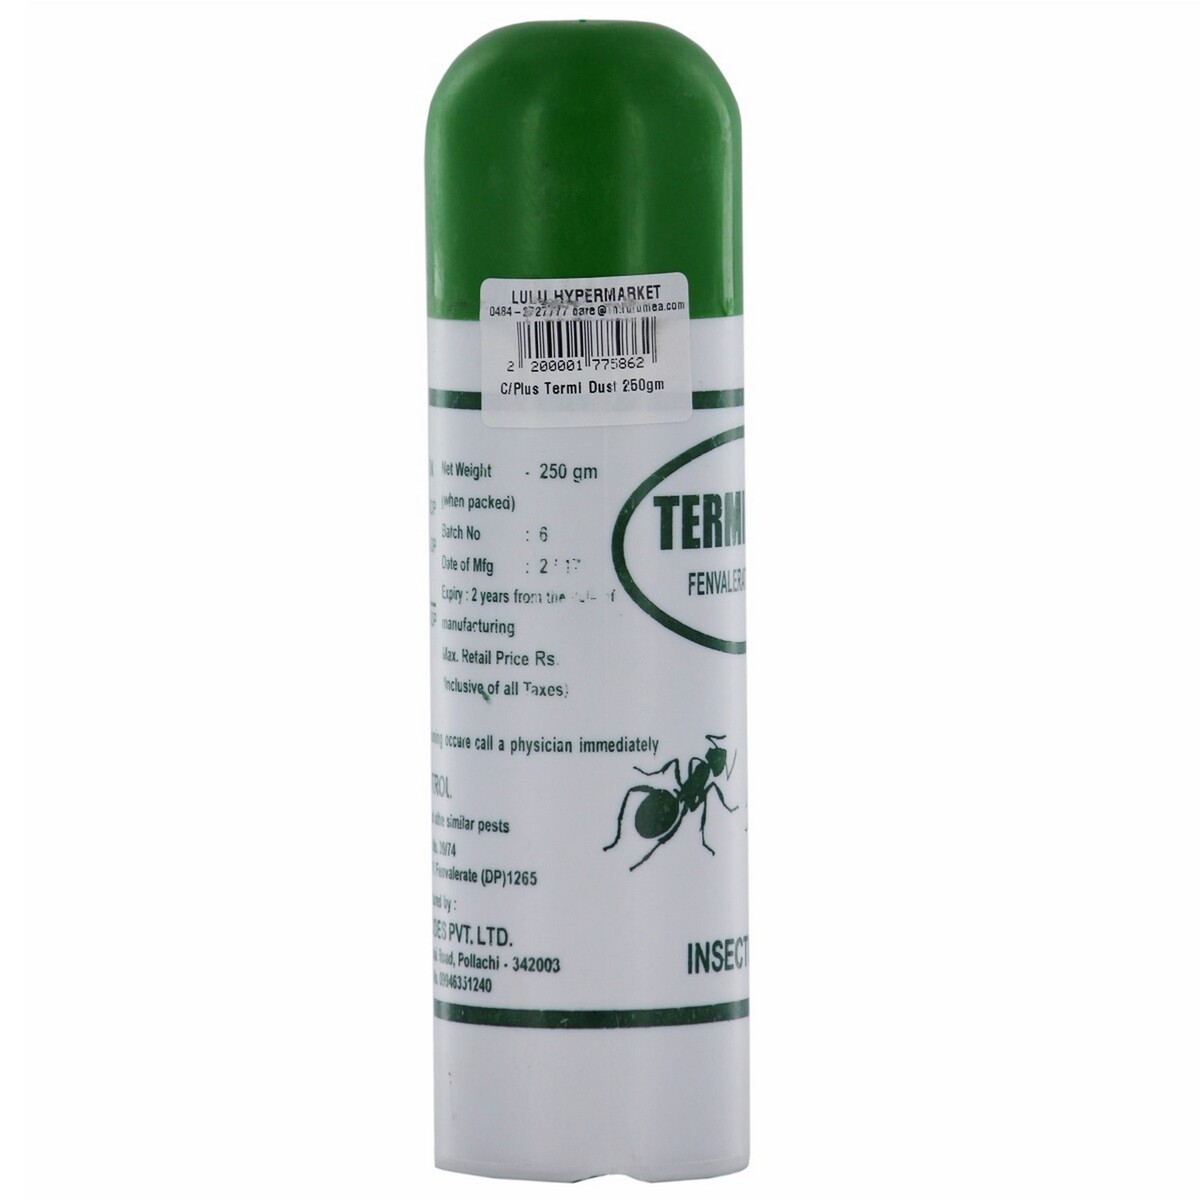 Clean Plus Termi Dust Insecticide 250g